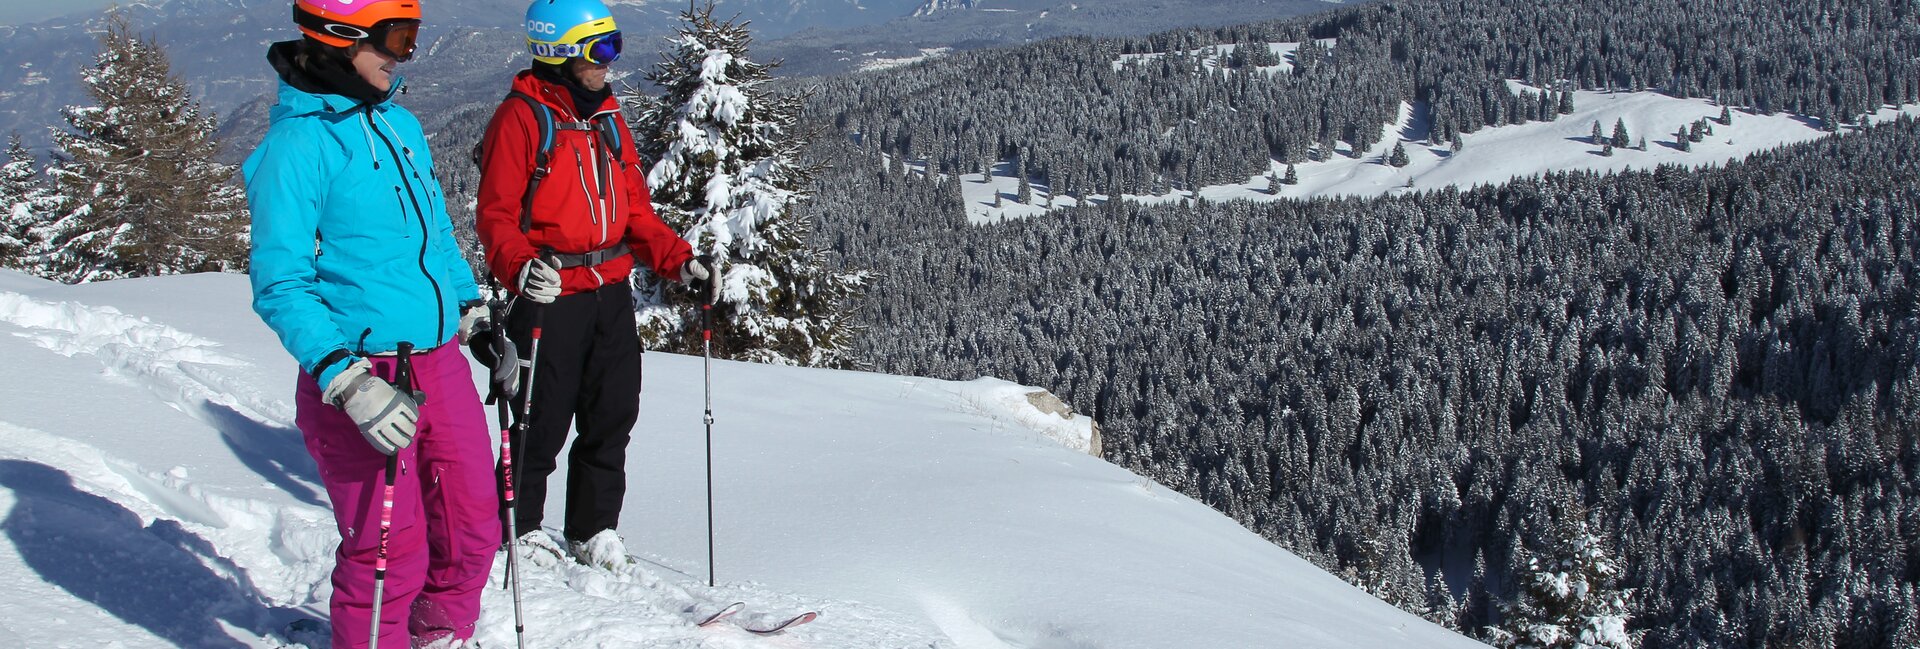 Skigebiet Folgaria Fiorentini - die Skitour dei Forti 